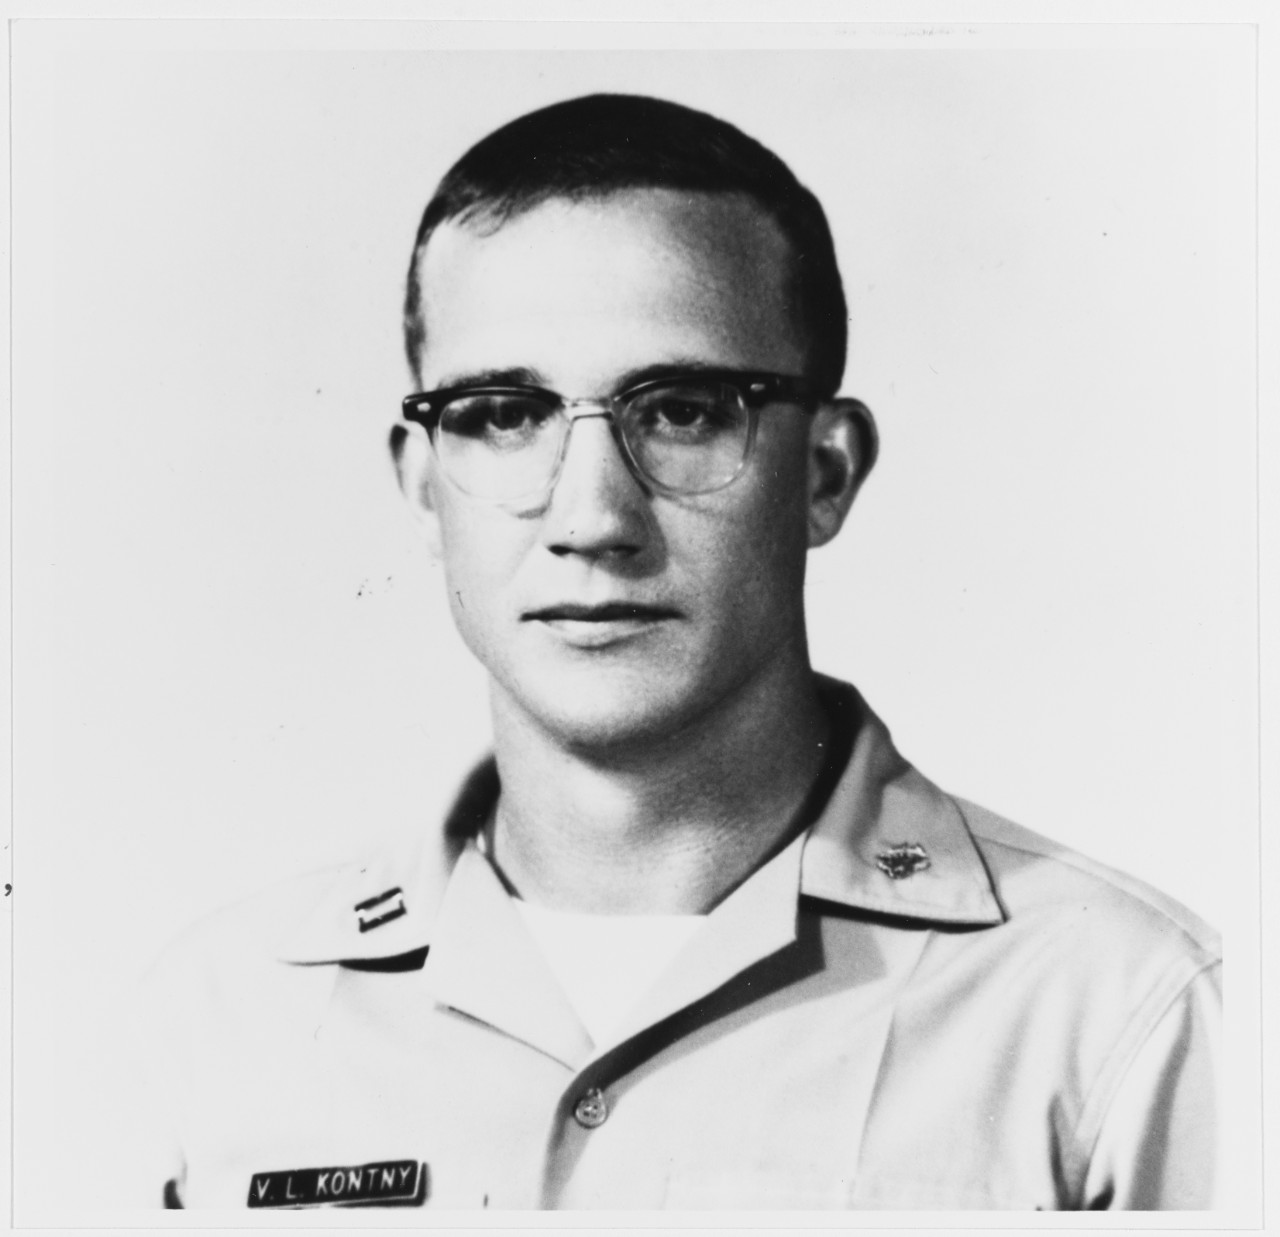 Lieutenant Vincent L. Kontny, USN (Civil Engineer Corps)